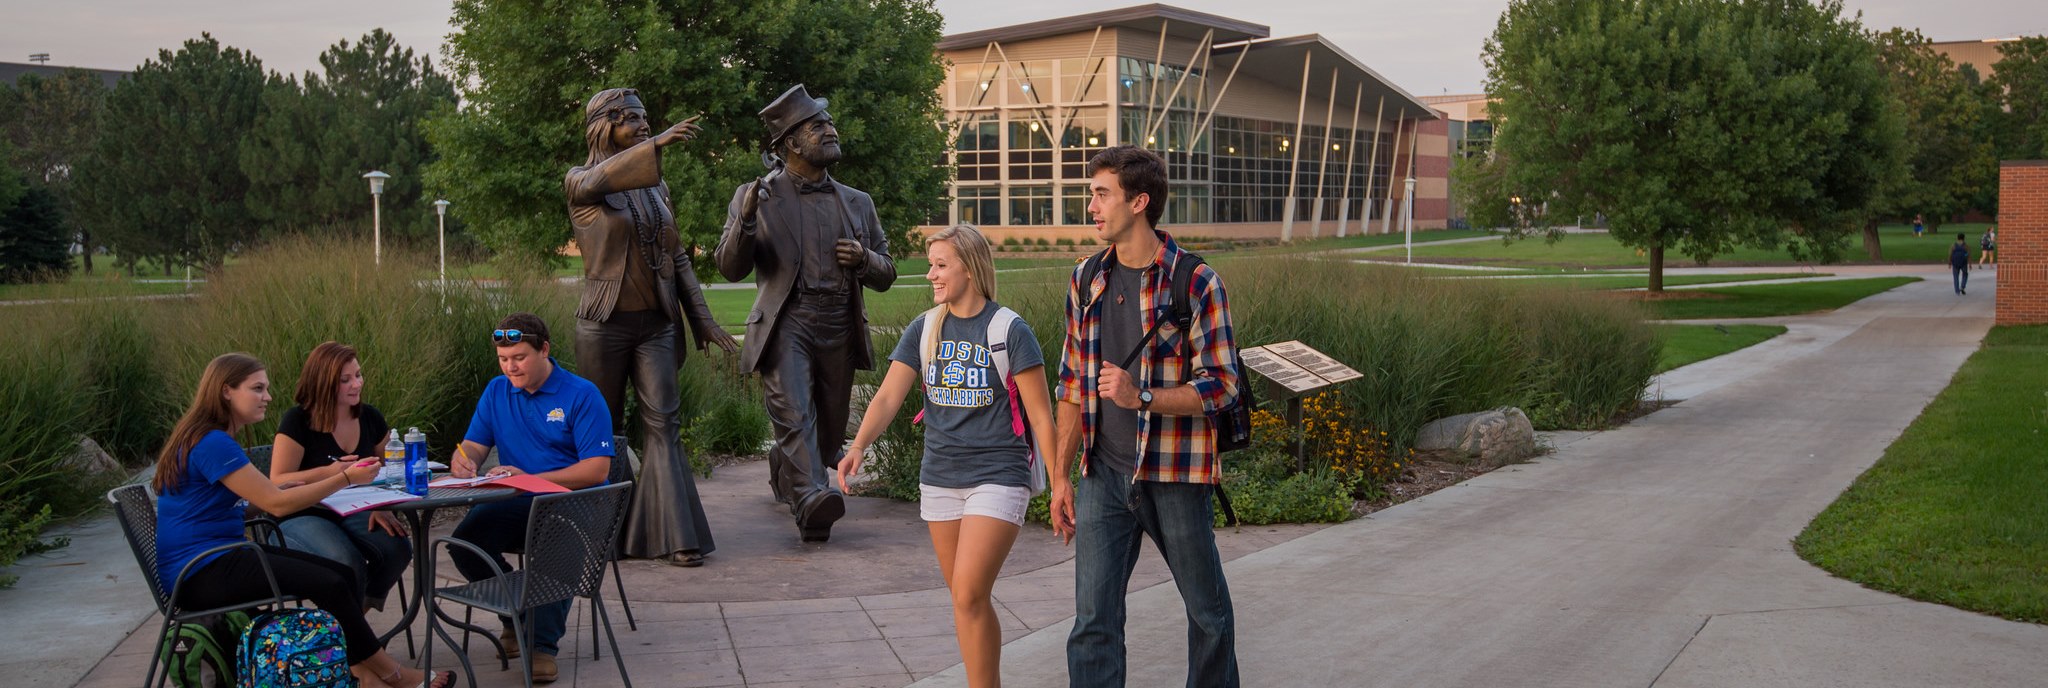 SDSU students walking on campus